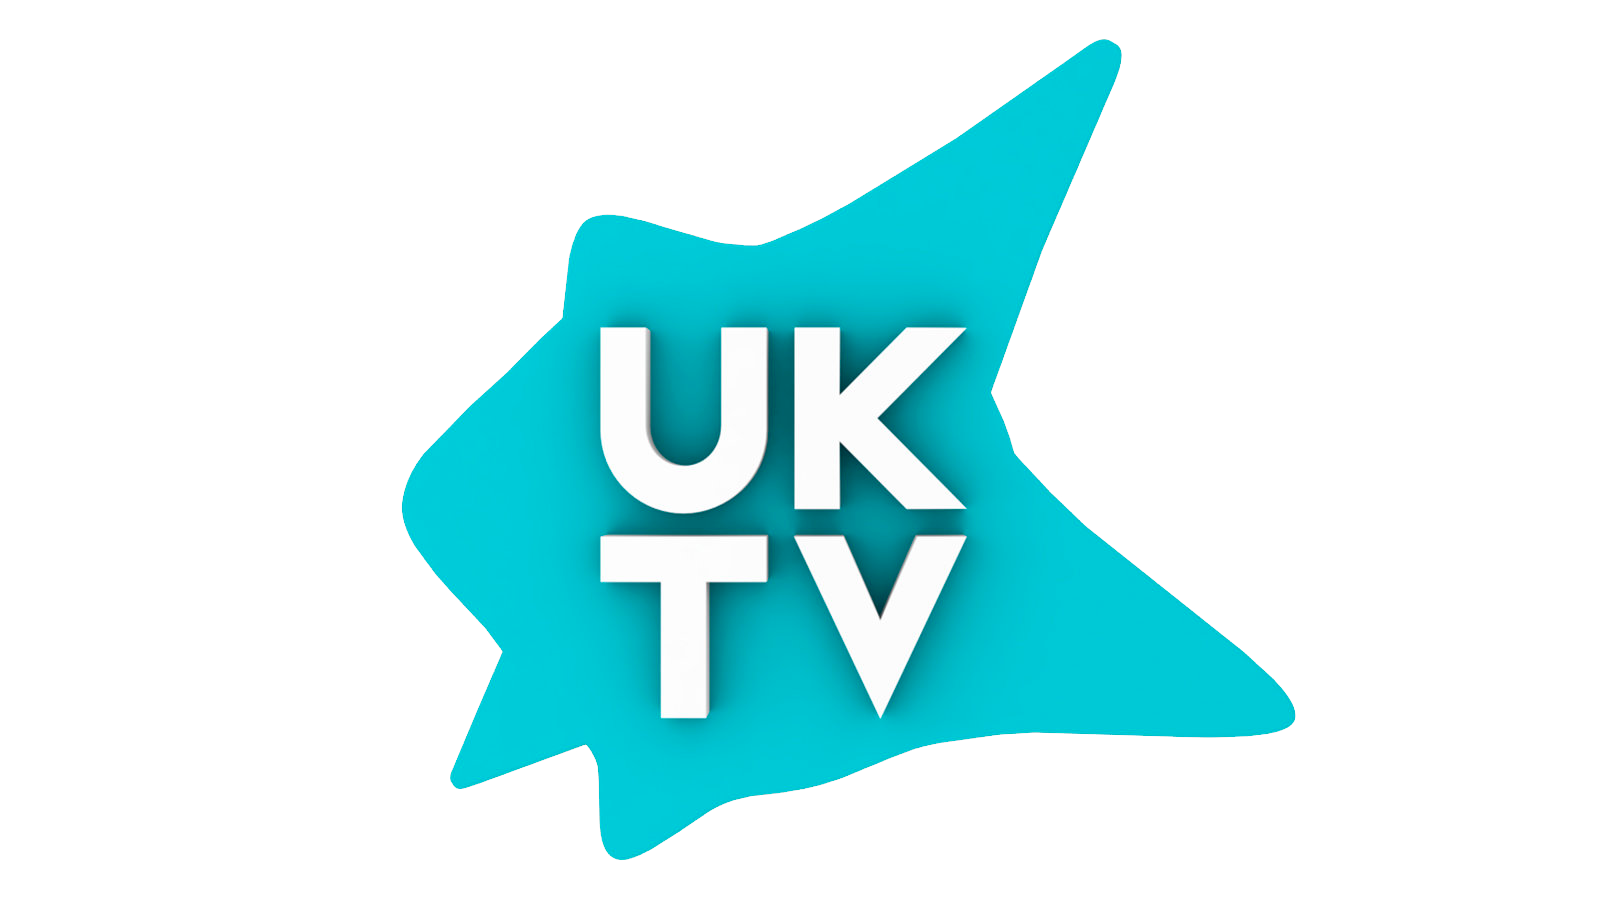 UKTV